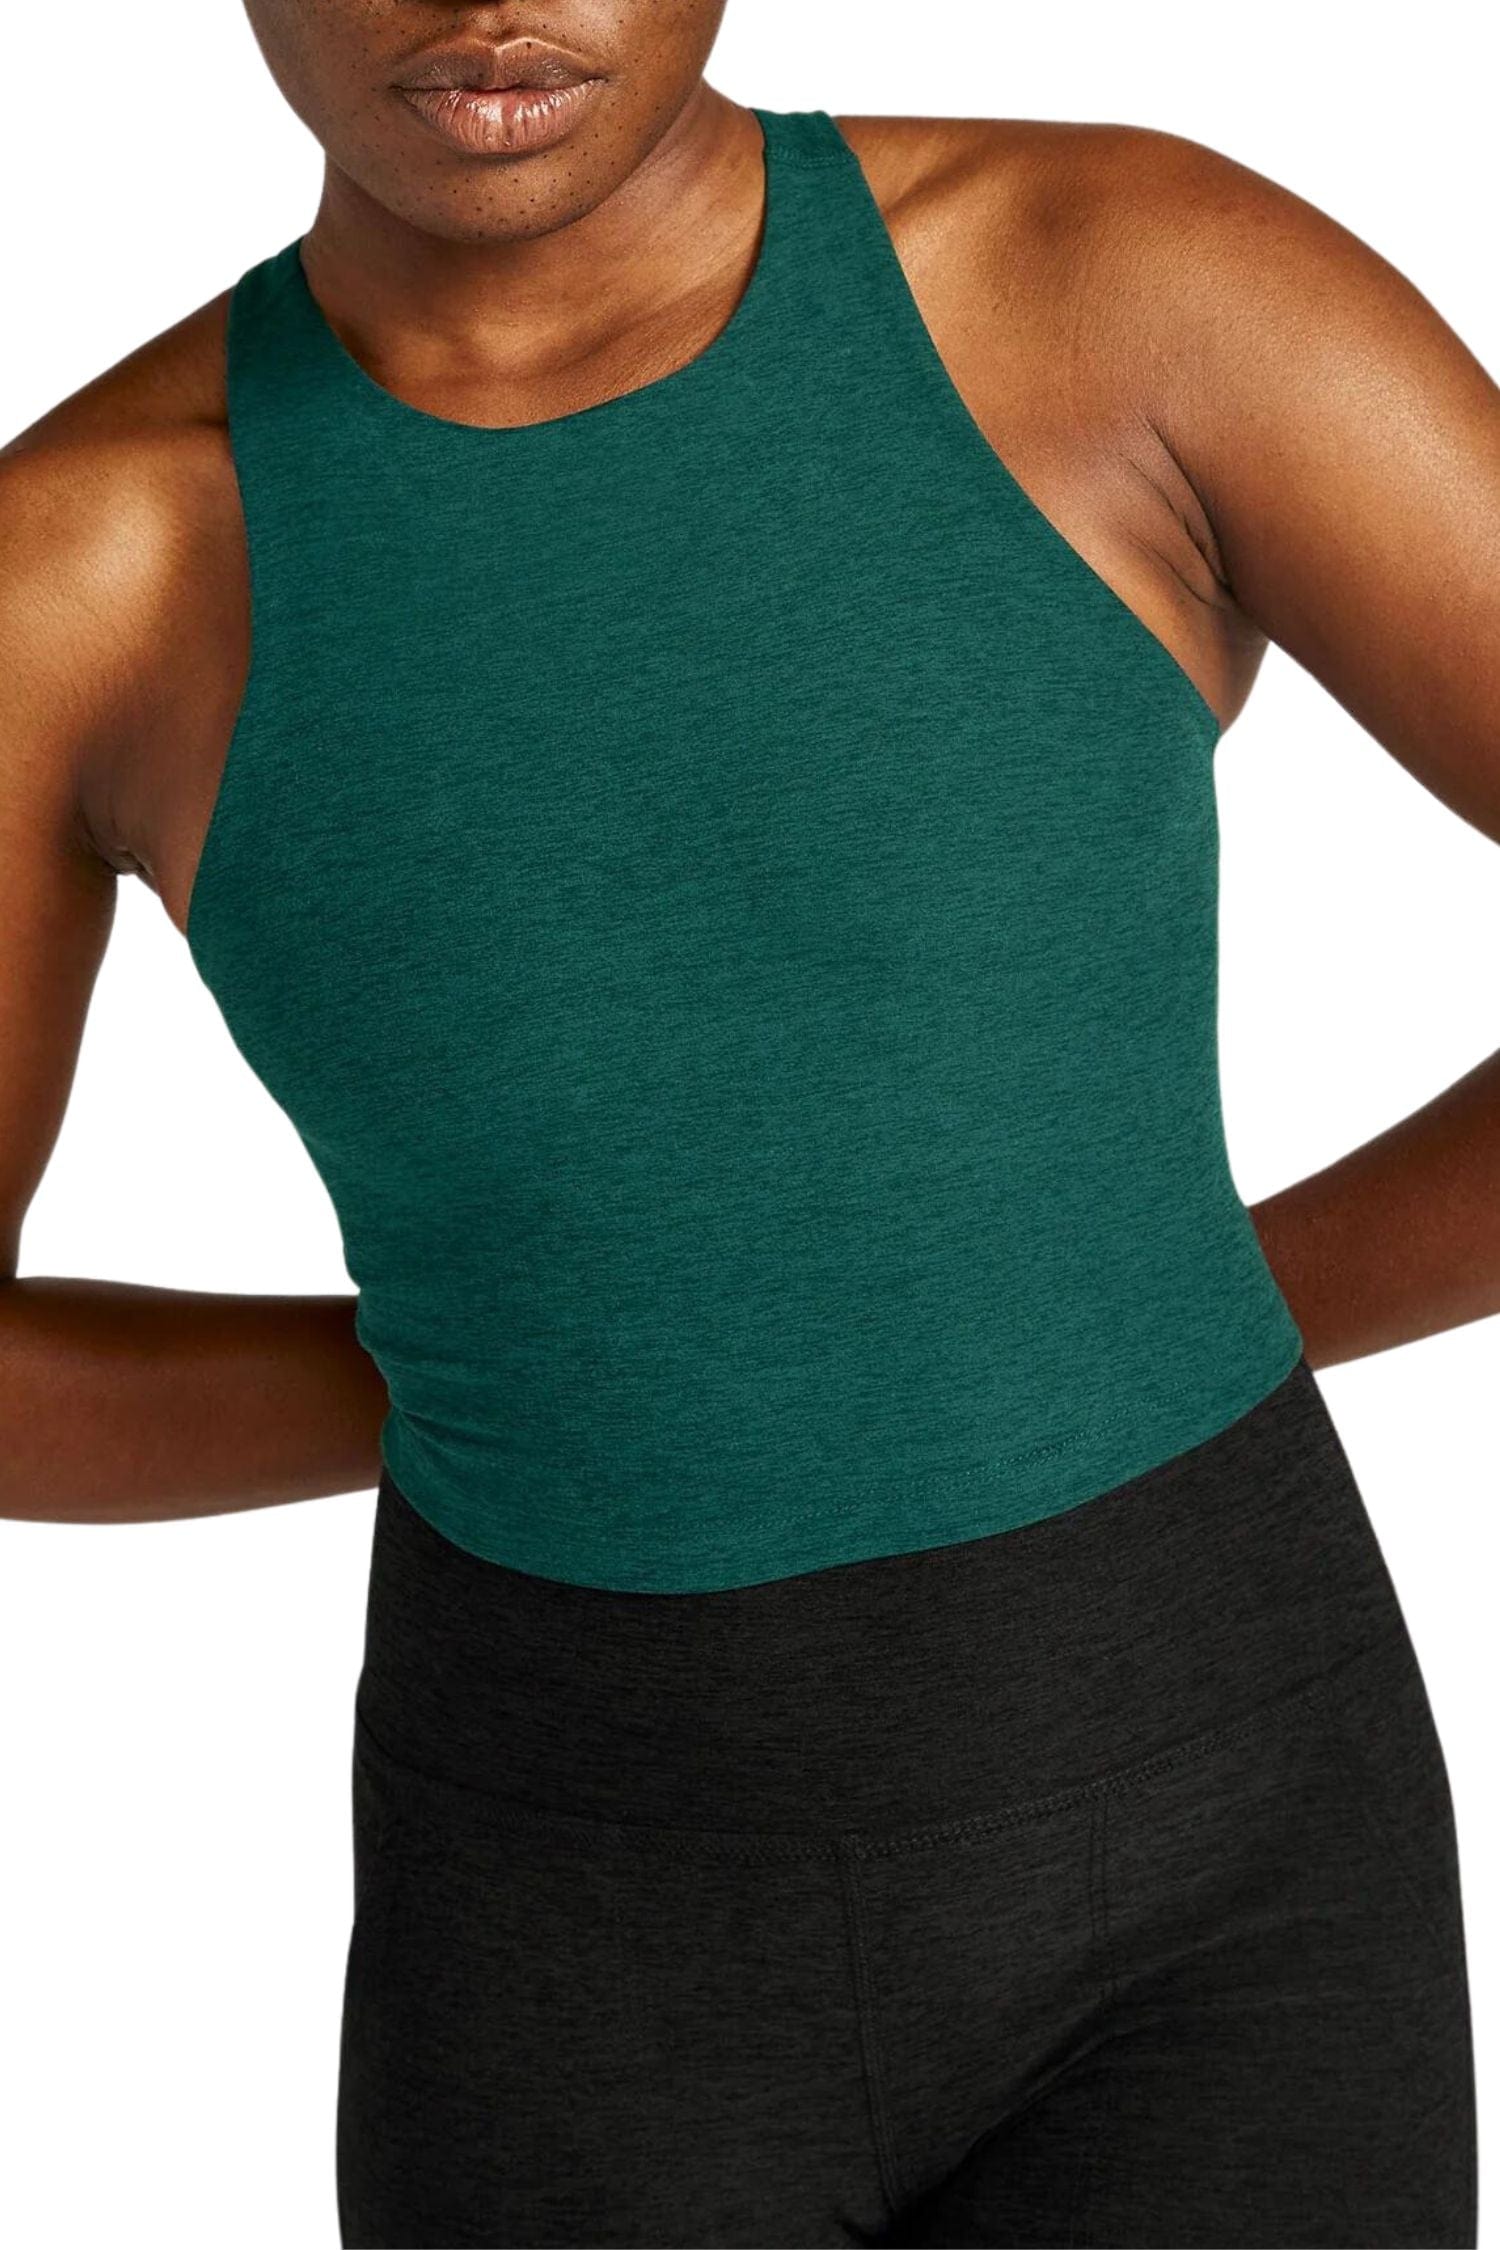 Slim Green Yoga Tank Tops & Sleeveless Shirts.